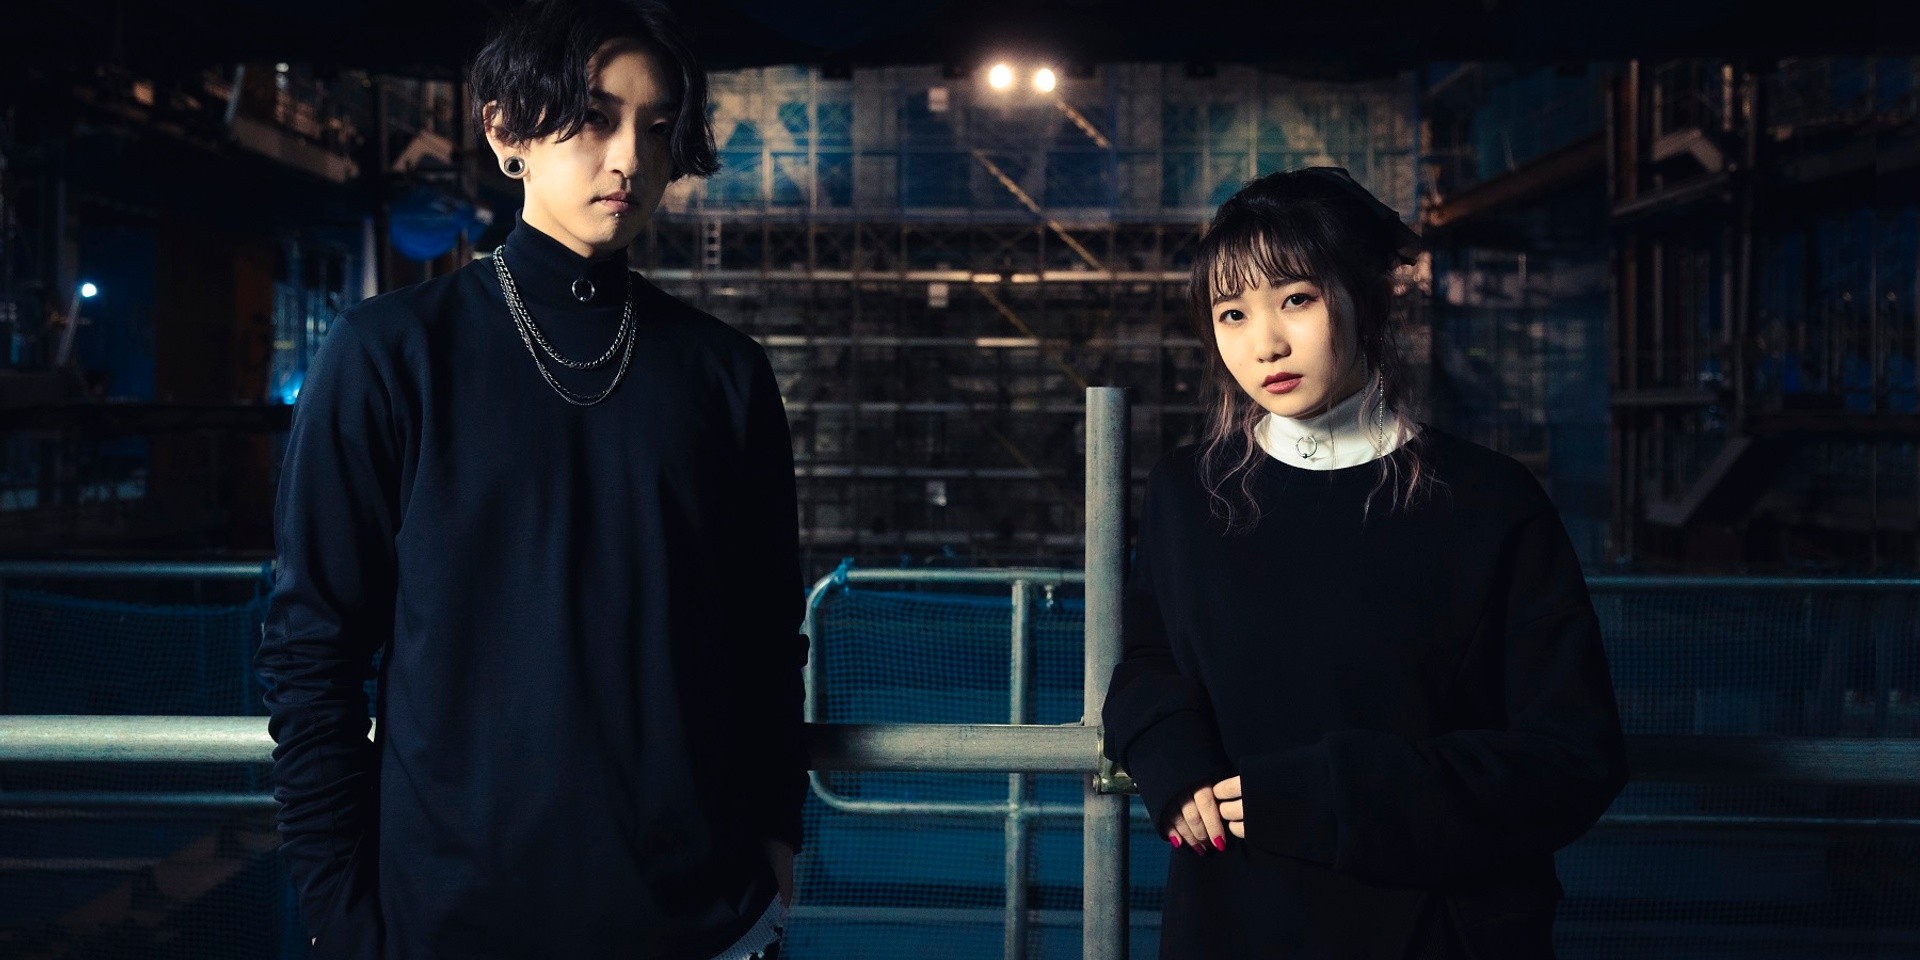 YOASOBI release first English album 'E-side' – listen